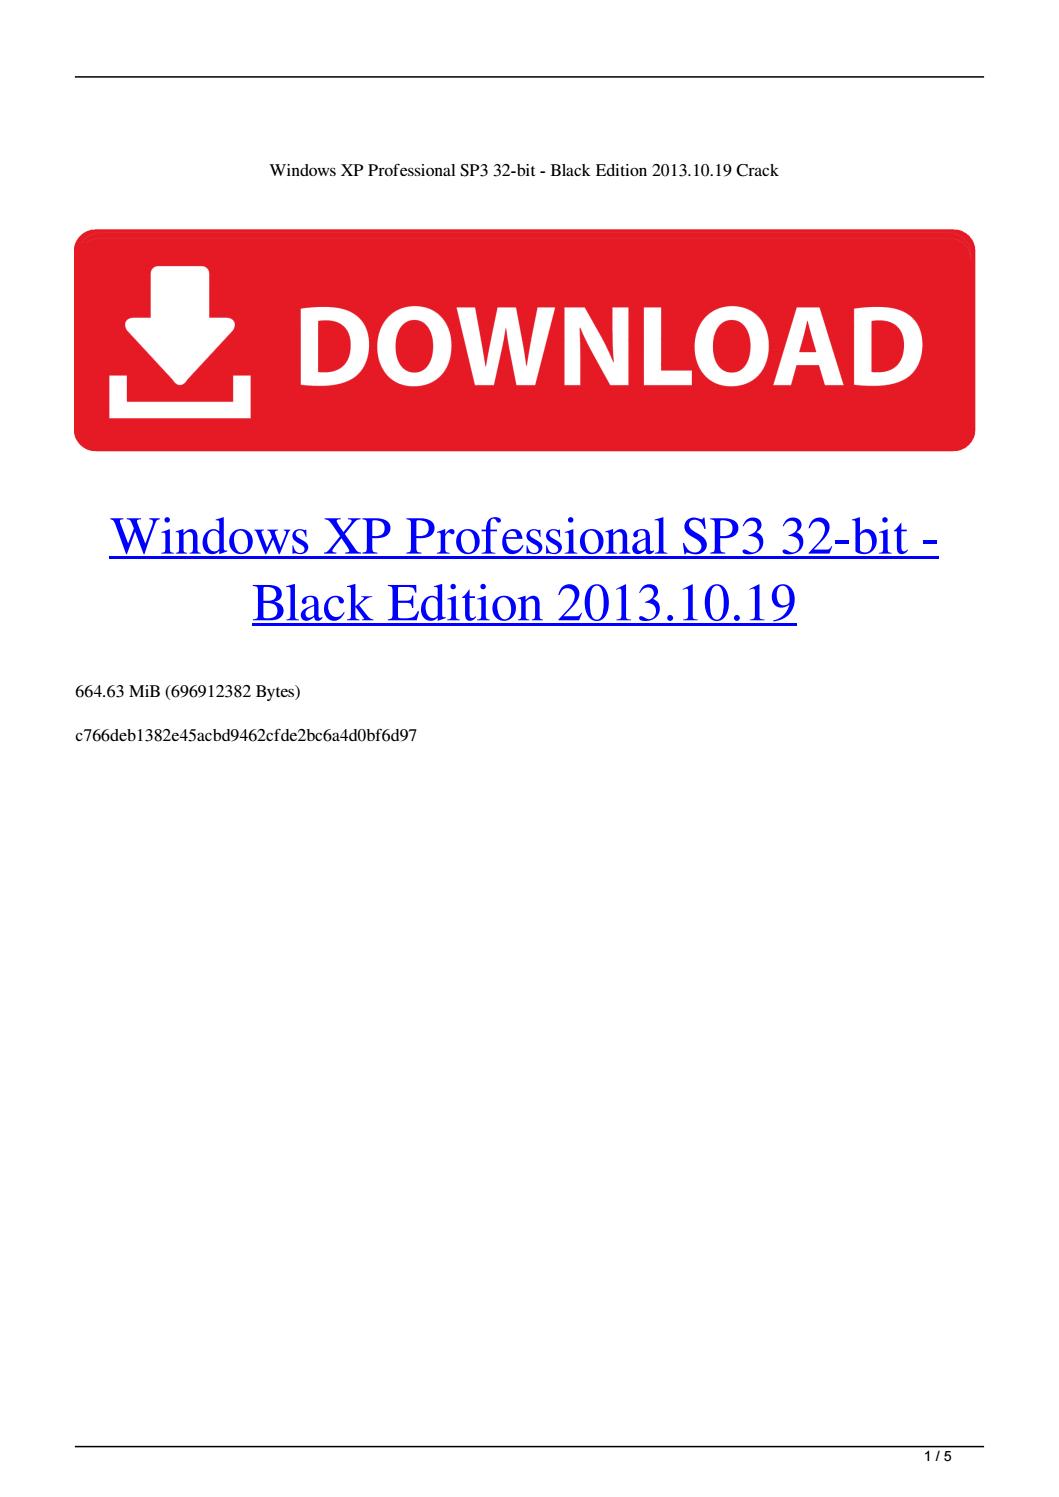 windows xp black edition iso 2018